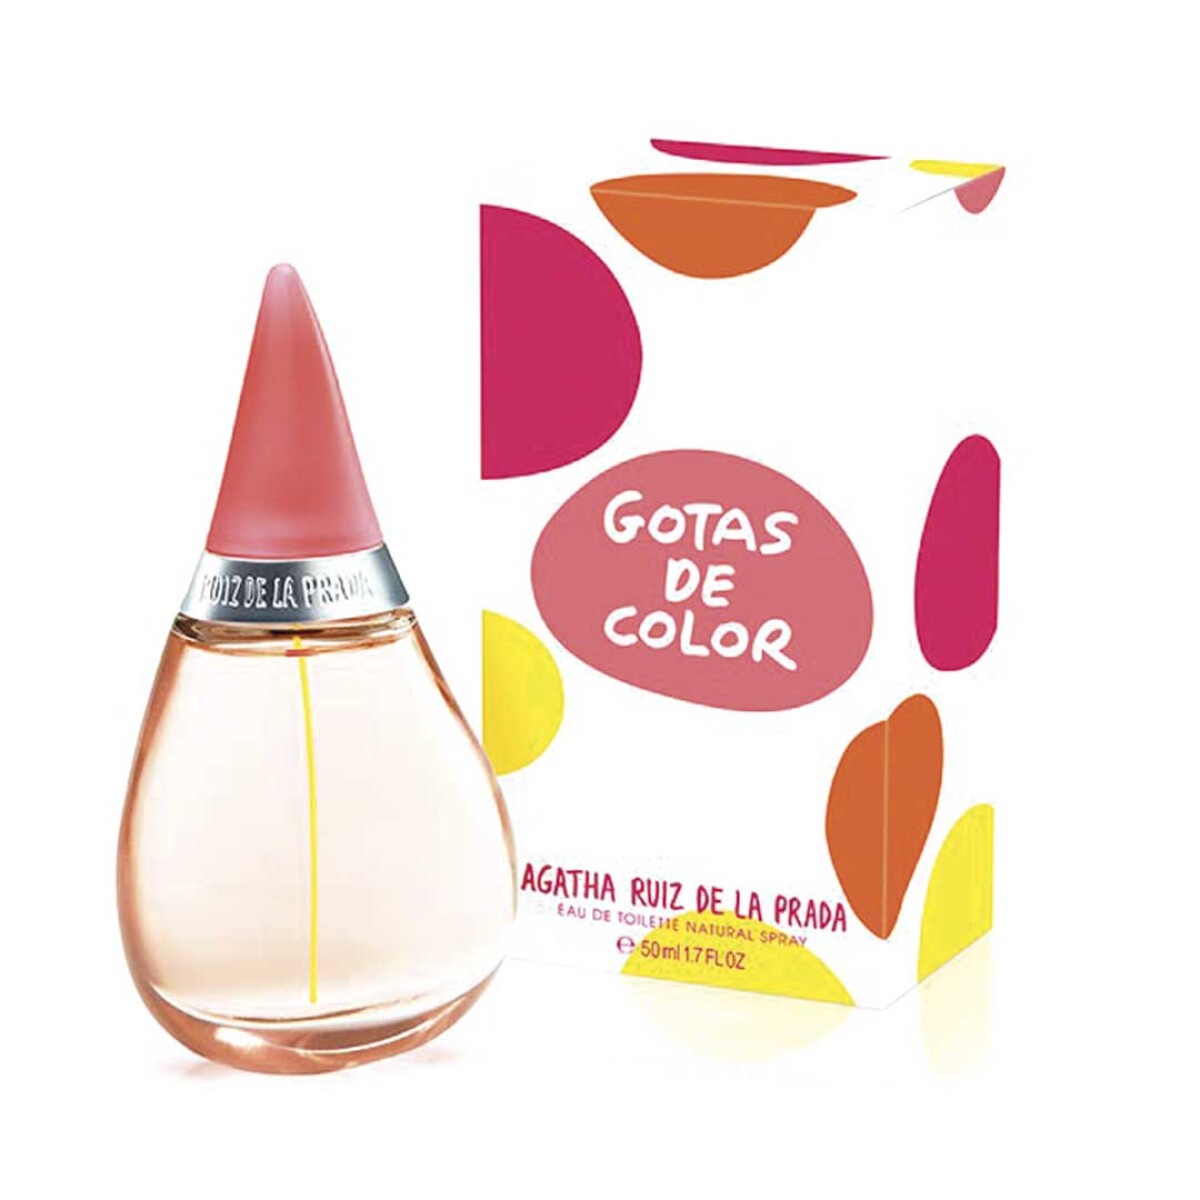 Perfume Gotas de Color 50ml Agatha Ruiz de la Prada - 001 